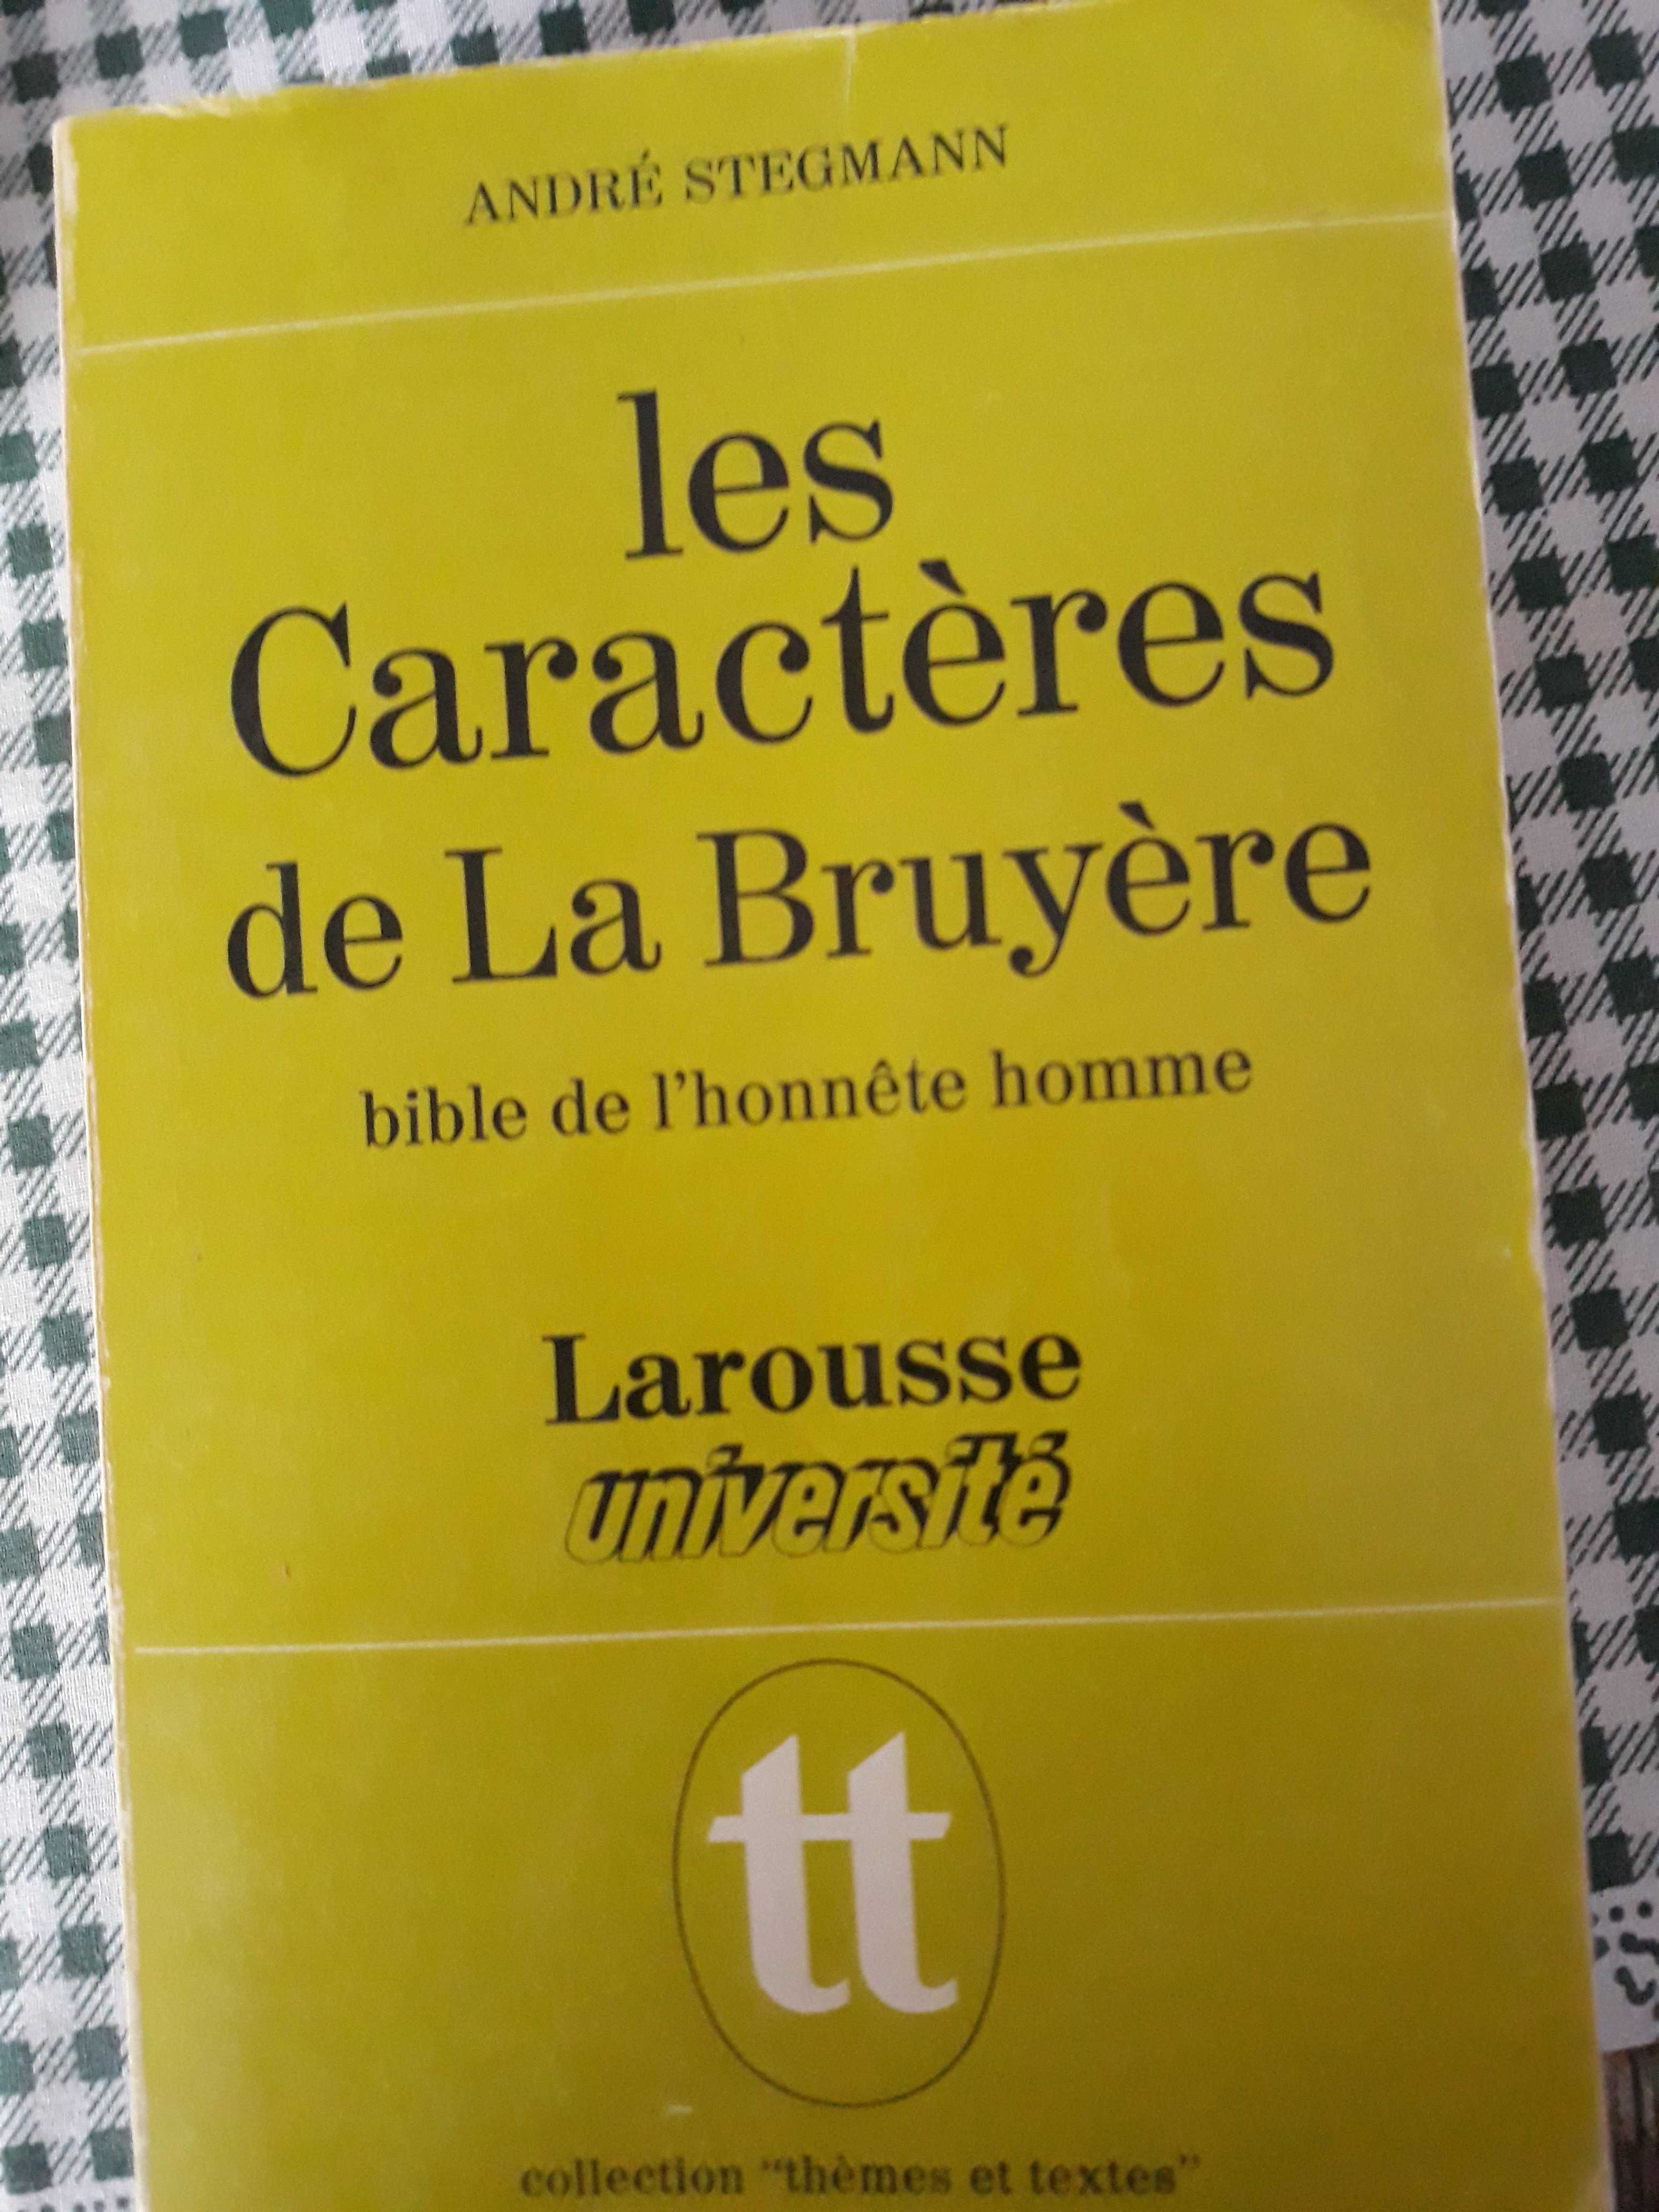 Marivaux, Balzac, Stendhal,  Mme de la Fayette, Zola, La Bruyère